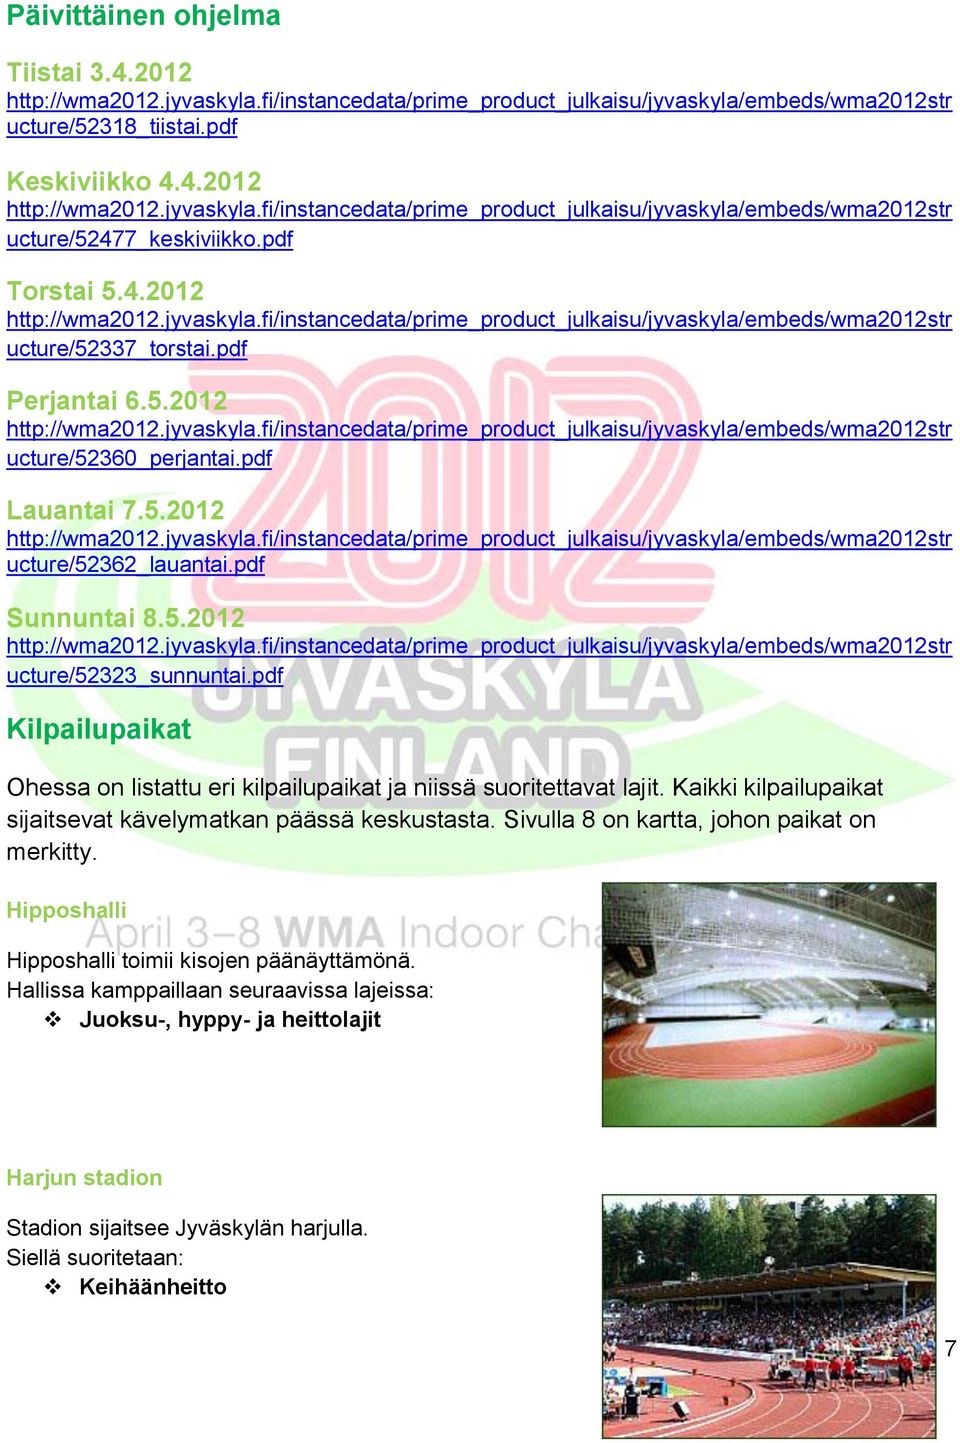 pdf Lauantai 7.5.2012 http://wma2012.jyvaskyla.fi/instancedata/prime_product_julkaisu/jyvaskyla/embeds/wma2012str ucture/52362_lauantai.pdf Sunnuntai 8.5.2012 http://wma2012.jyvaskyla.fi/instancedata/prime_product_julkaisu/jyvaskyla/embeds/wma2012str ucture/52323_sunnuntai.